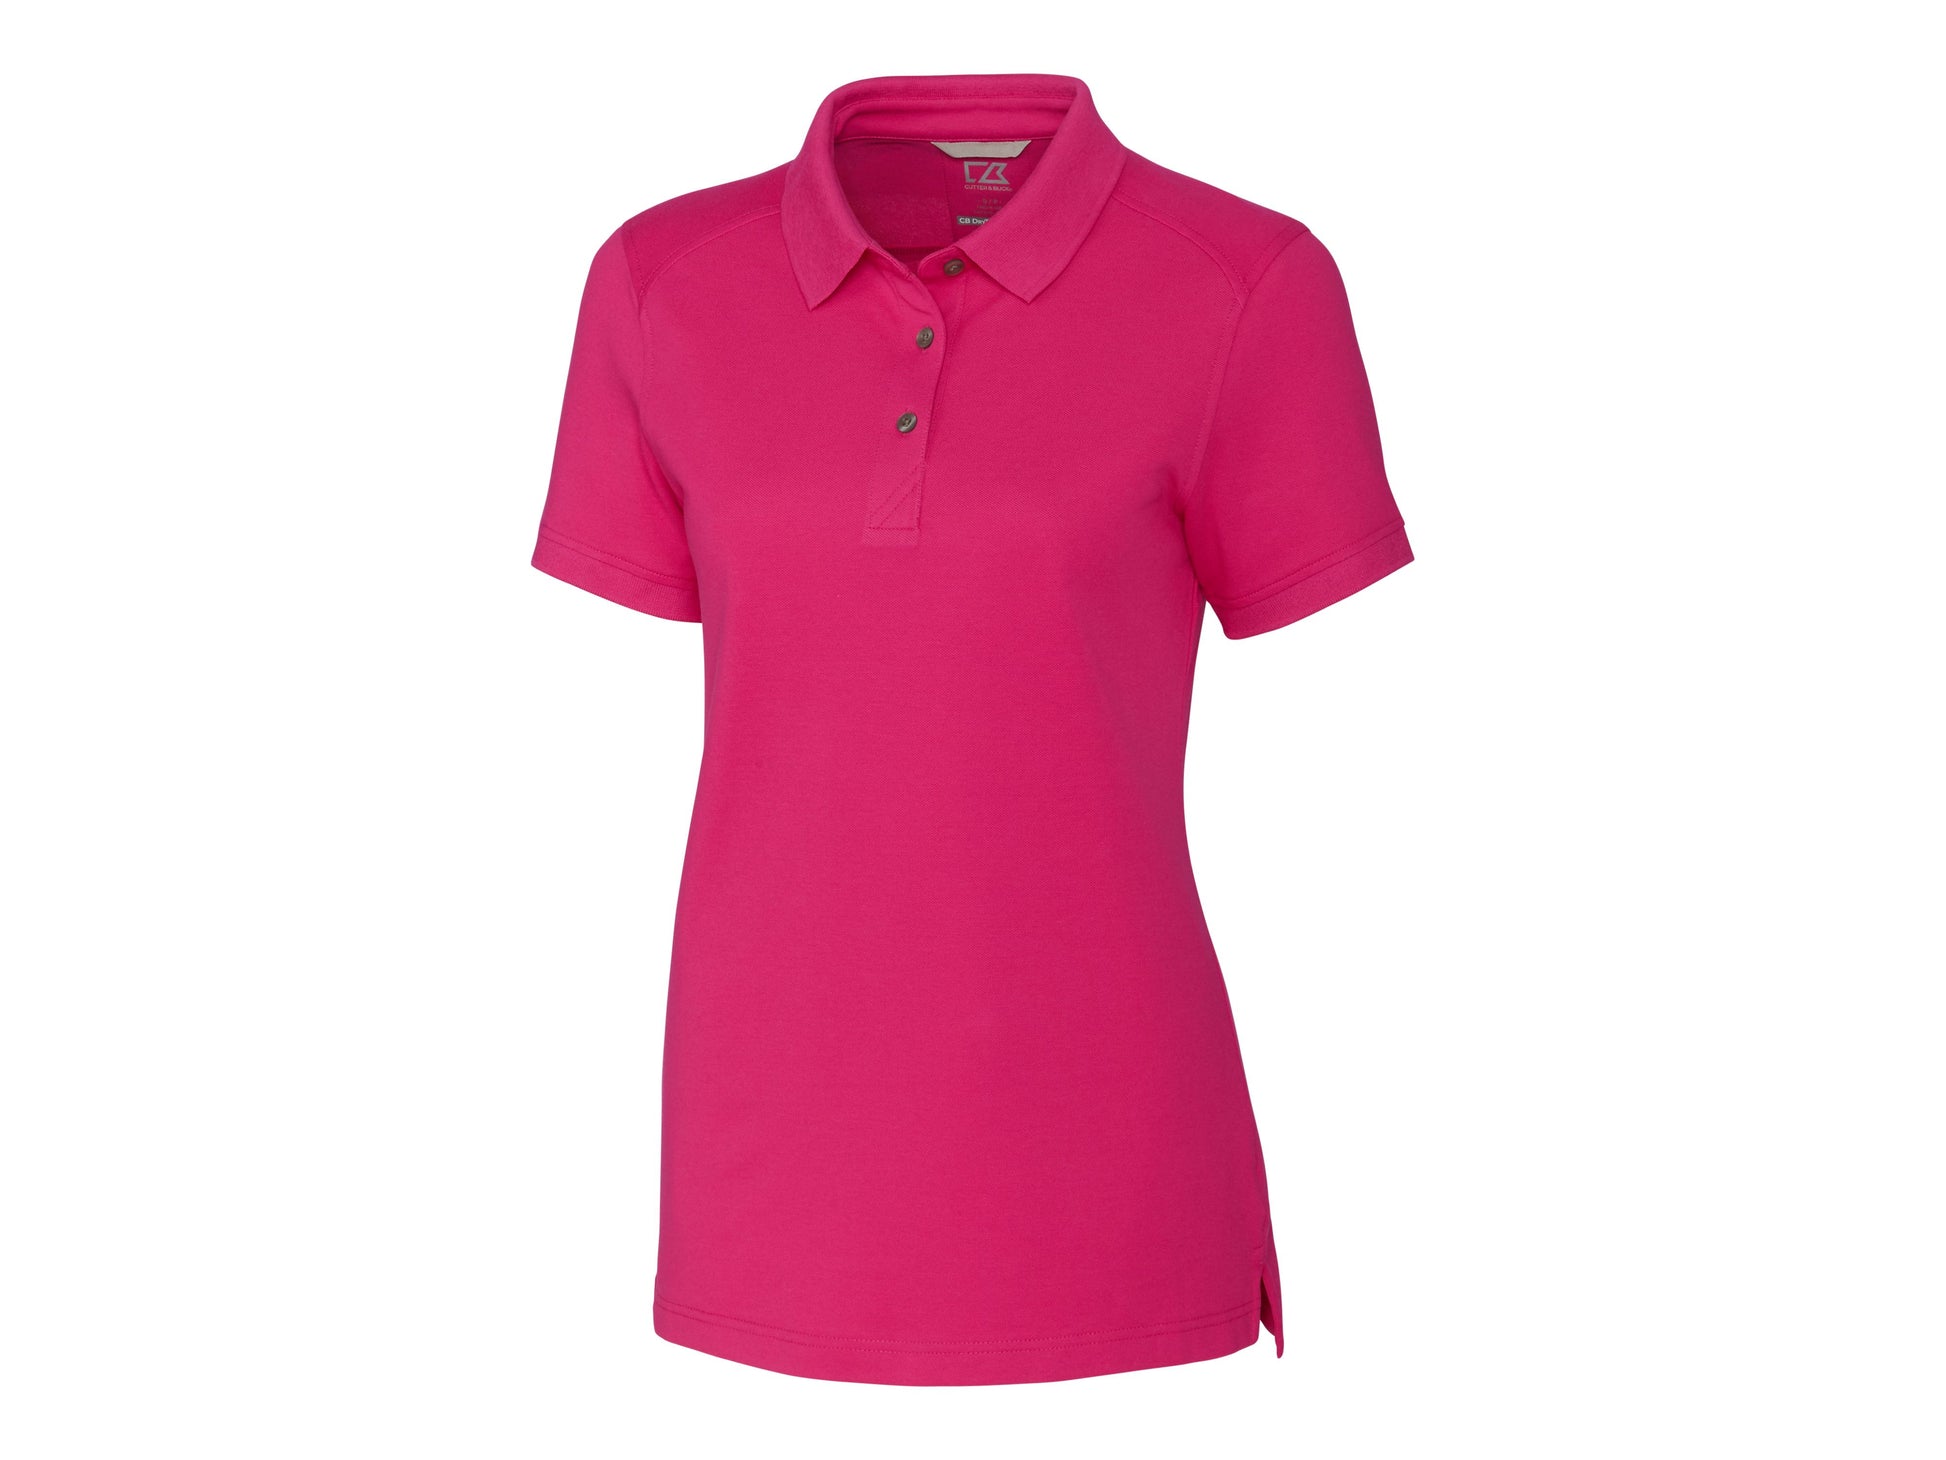 Cutter and Buck Shirts Advantage Polo (Women's Cut) - LCK08685 - Refresh